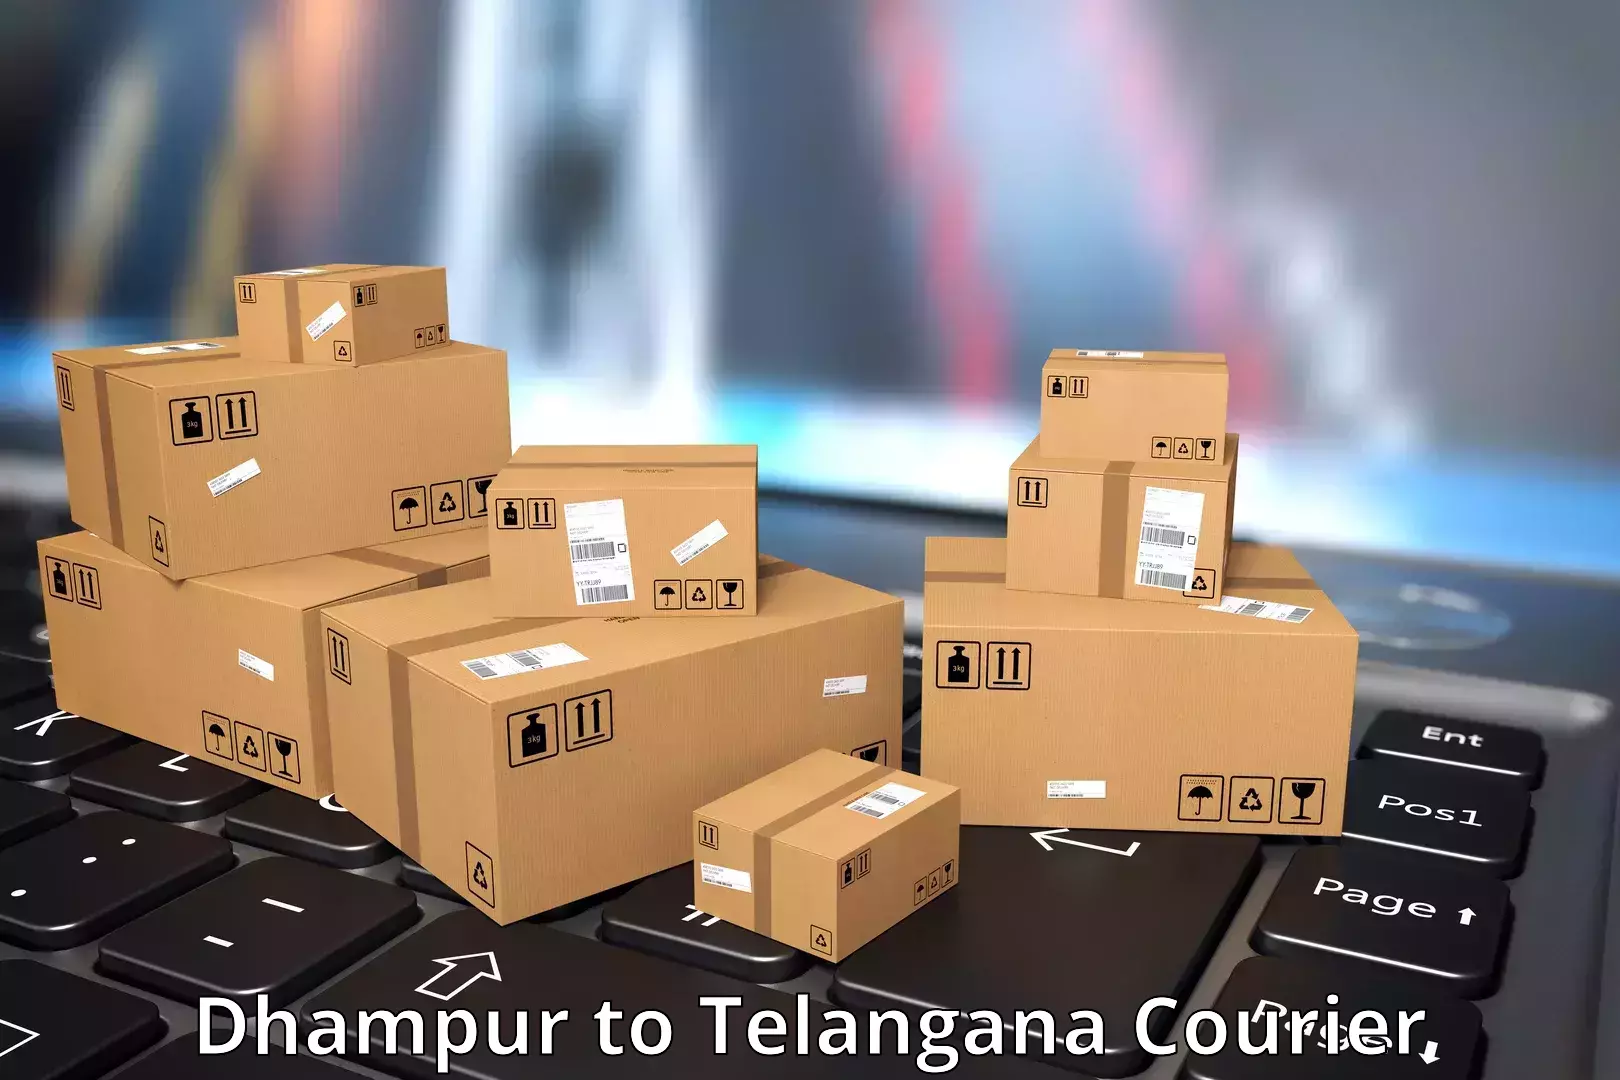 Tech-enabled shipping Dhampur to Miryalaguda